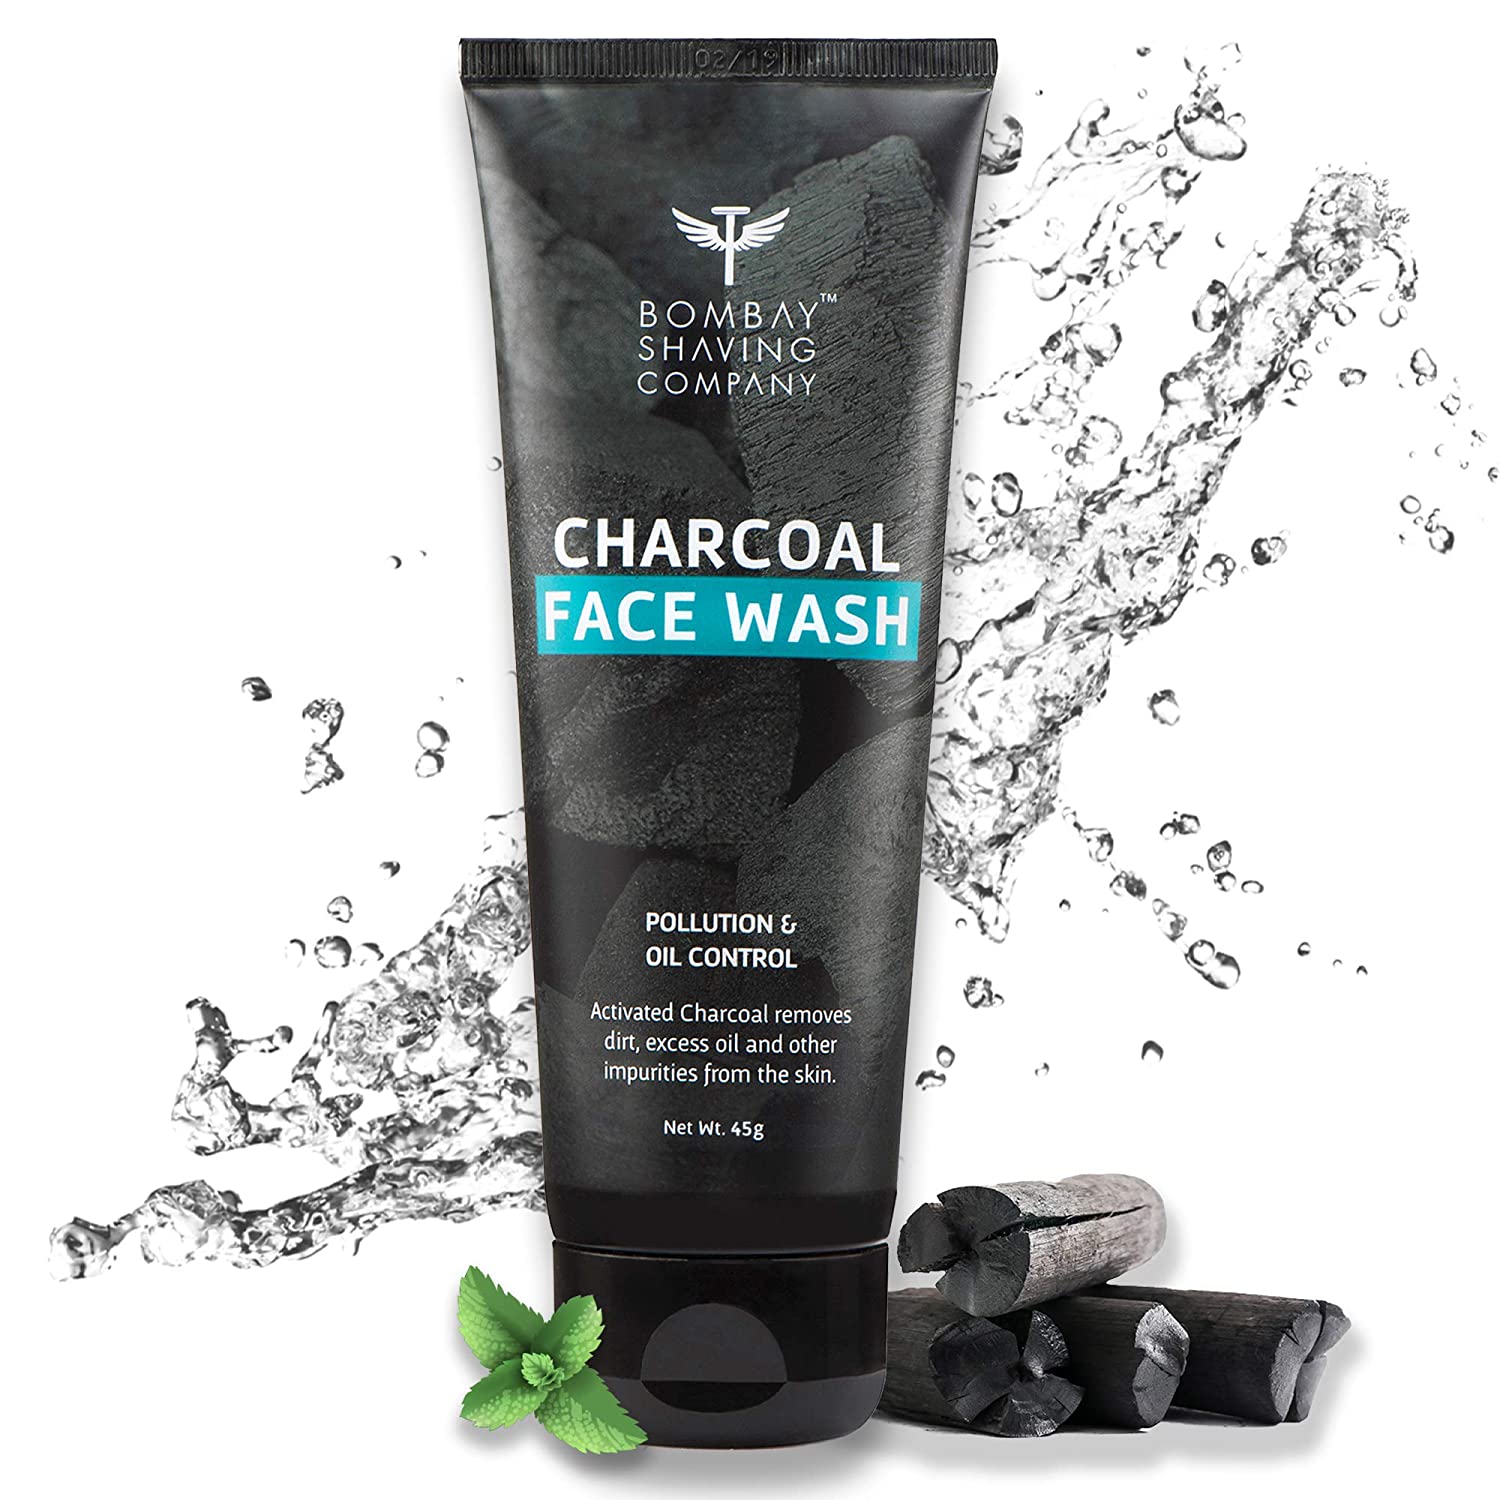 Charcoal face wash for men